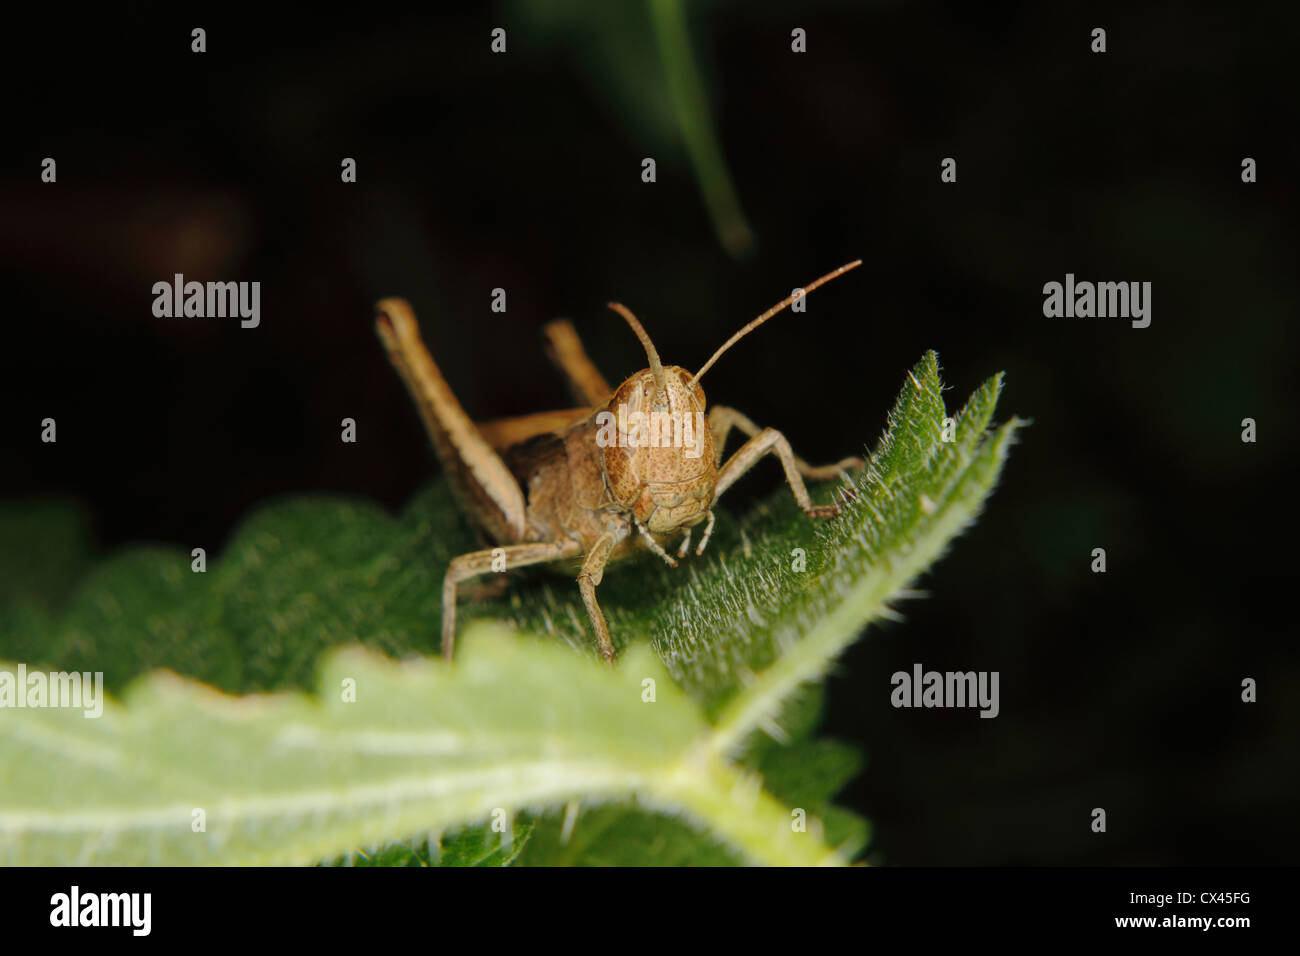 Field grasshopper (Chorthippus albomarginatus) on a leaf Stock Photo